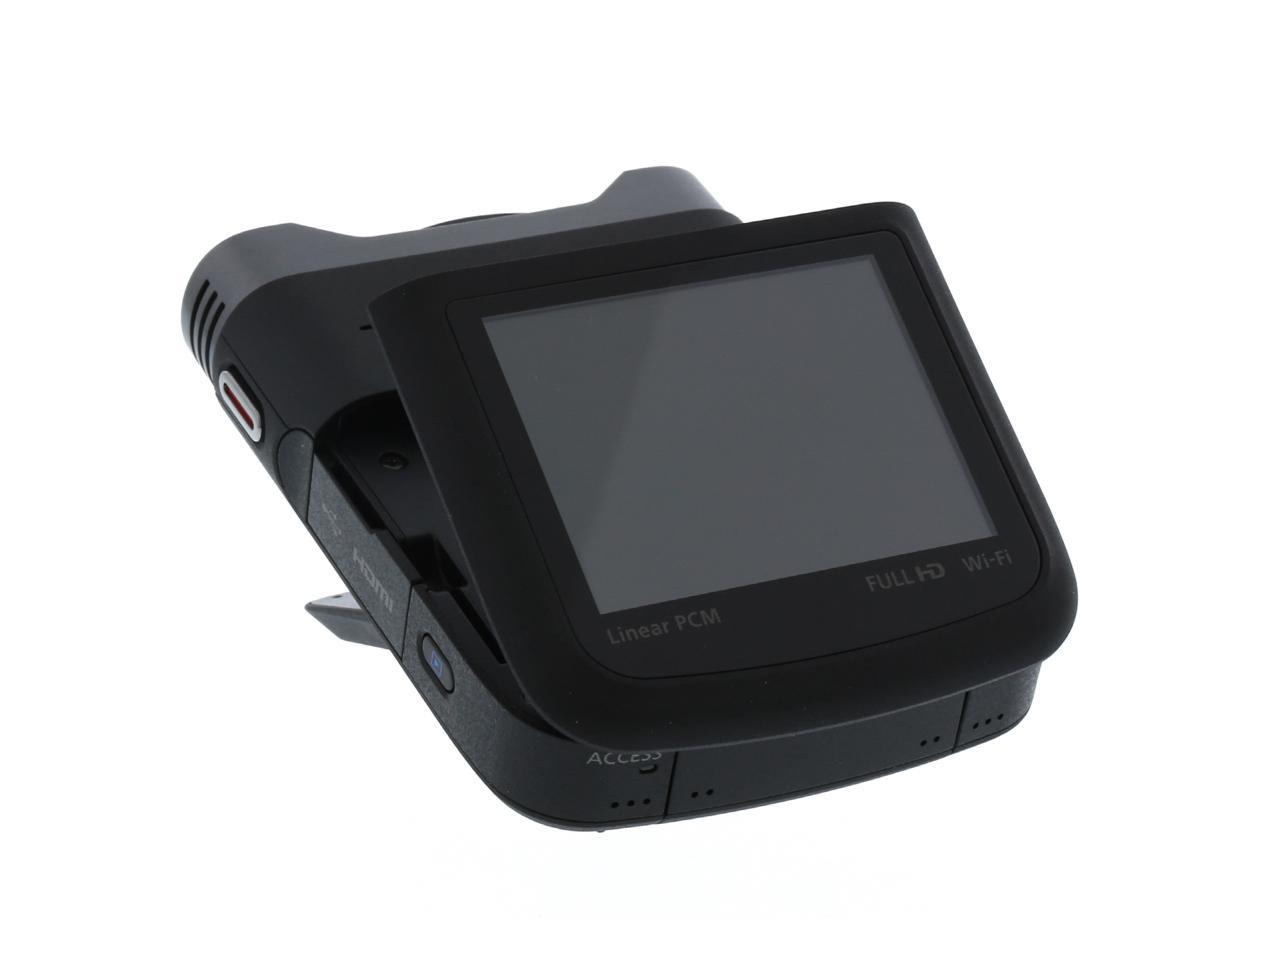 Canon VIXIA mini X 9114B002 Black Full HD HDD/Flash Memory Camcorder